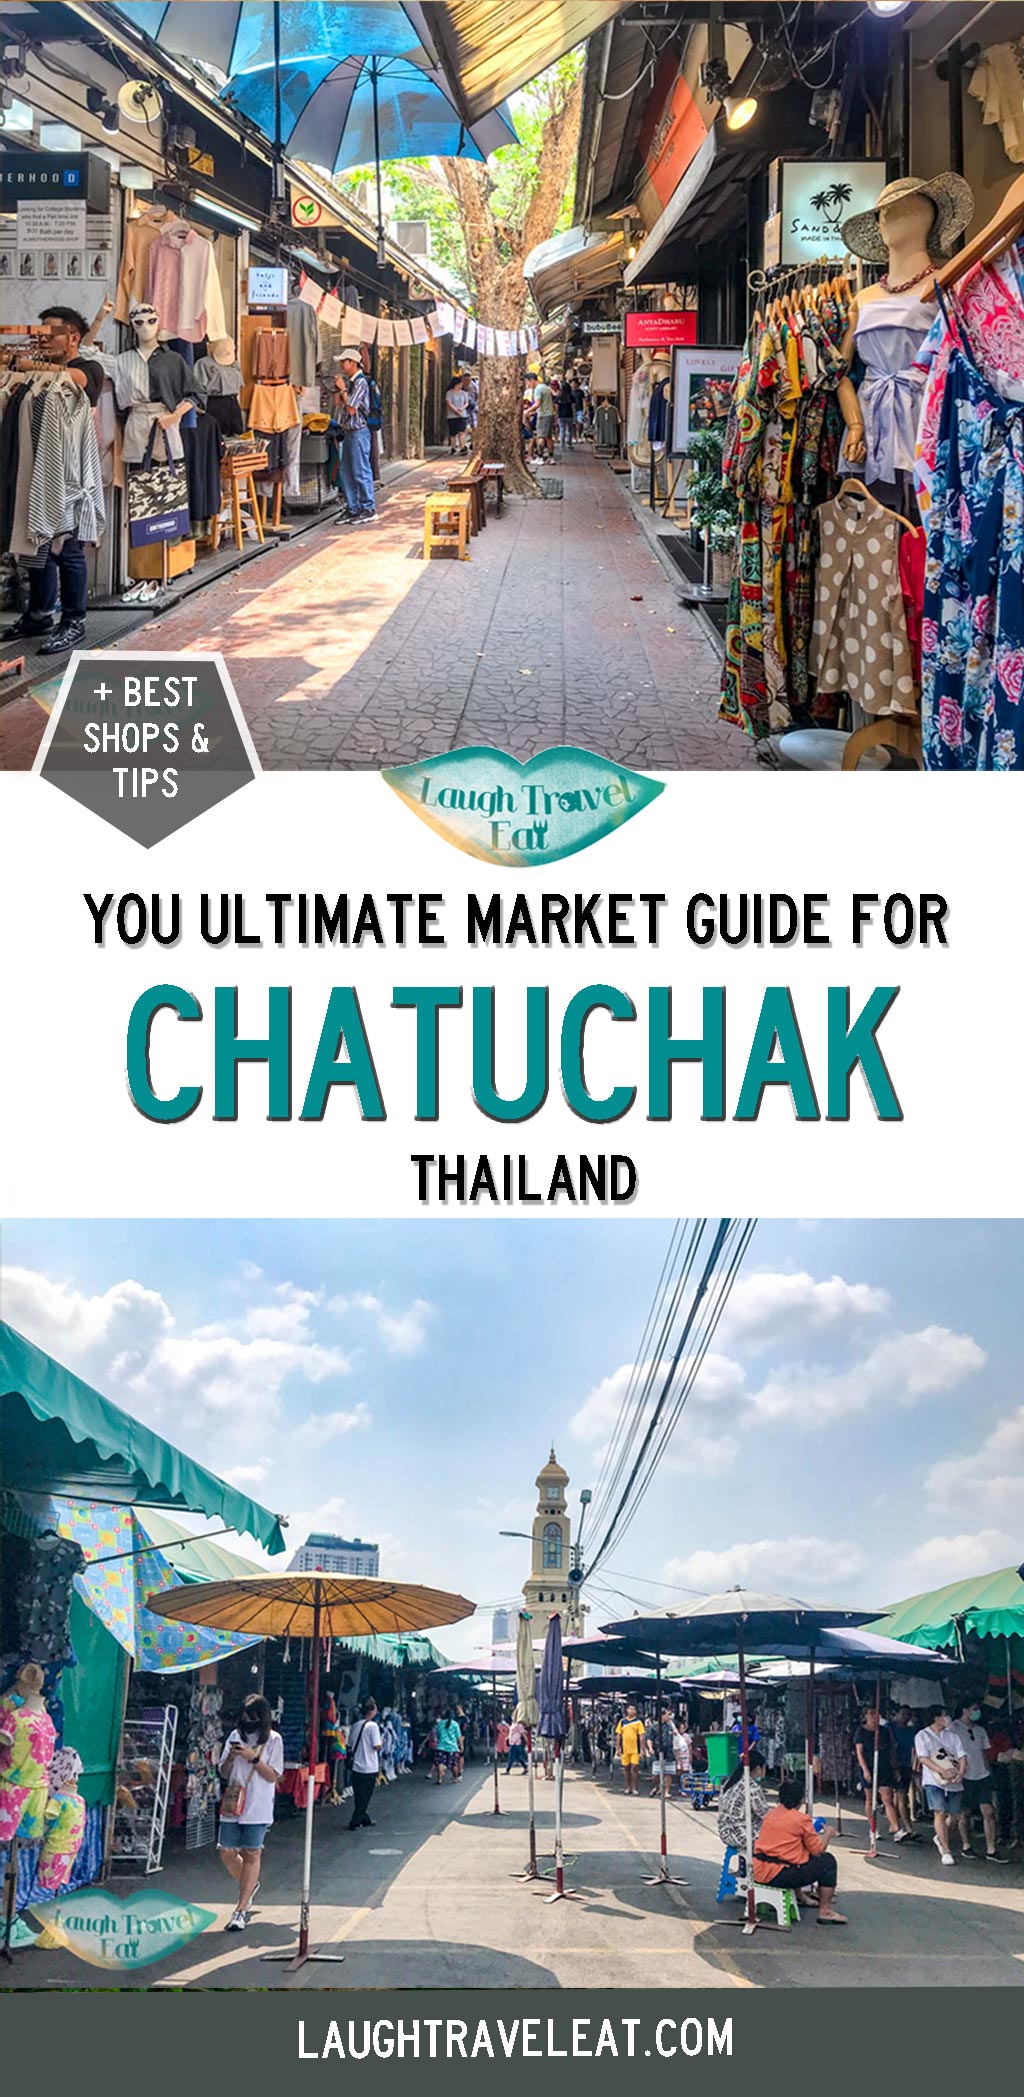 Spare bag needed as so much shopping! - Review of Chatuchak Weekend Market,  Bangkok, Thailand - Tripadvisor